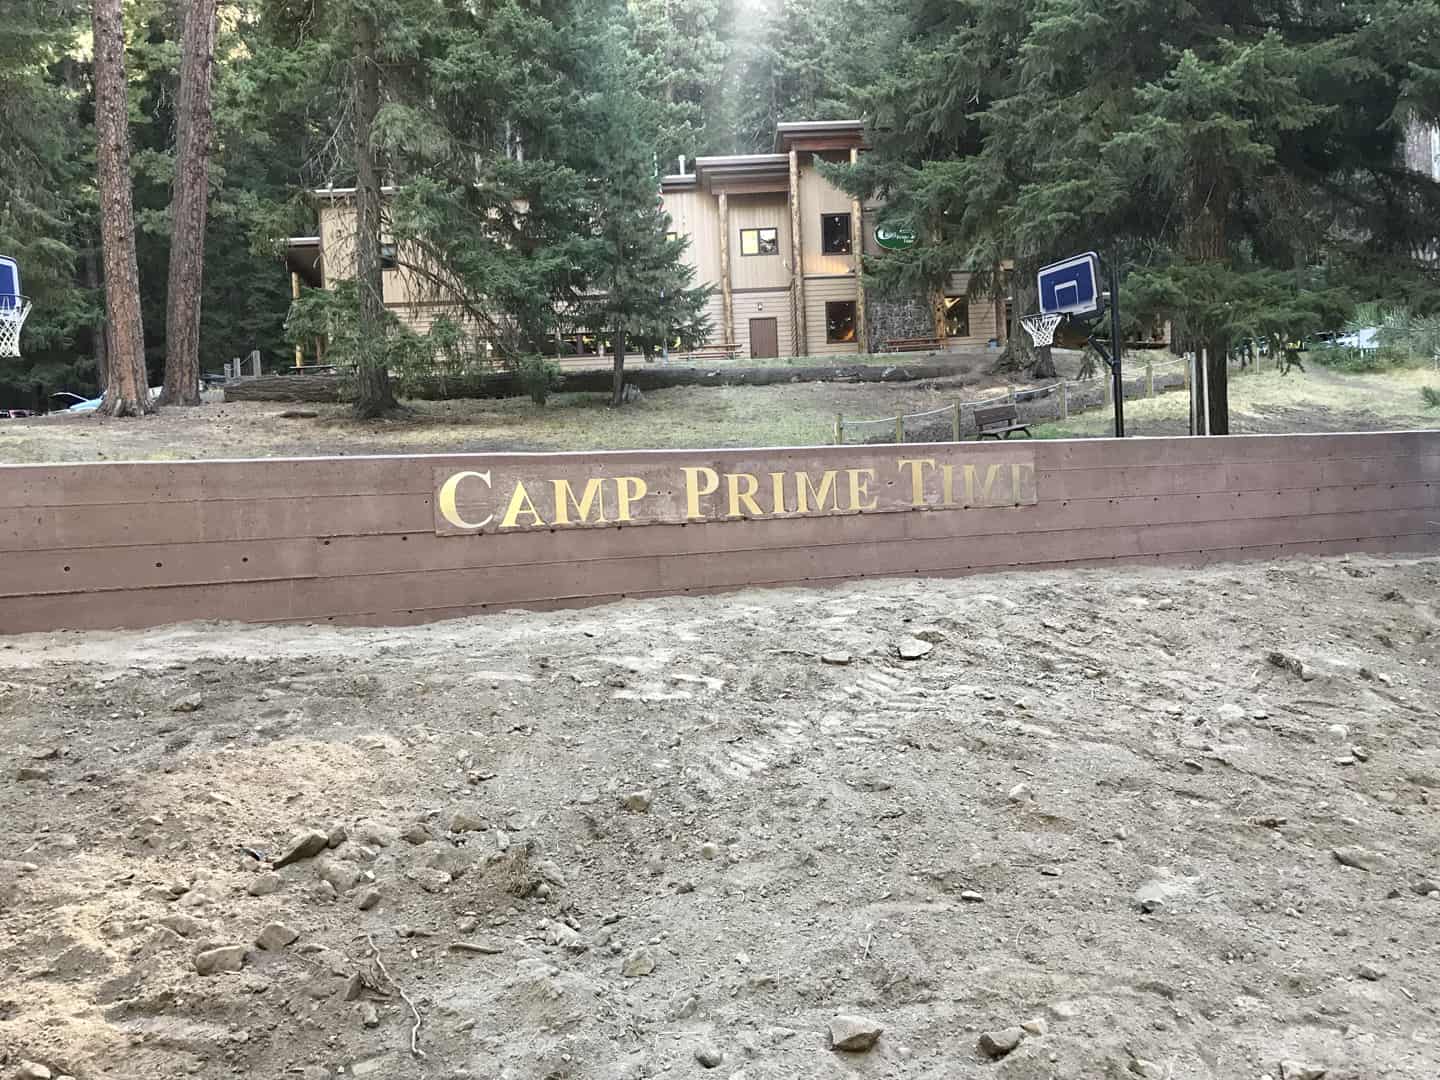 Camp Primetime Signage